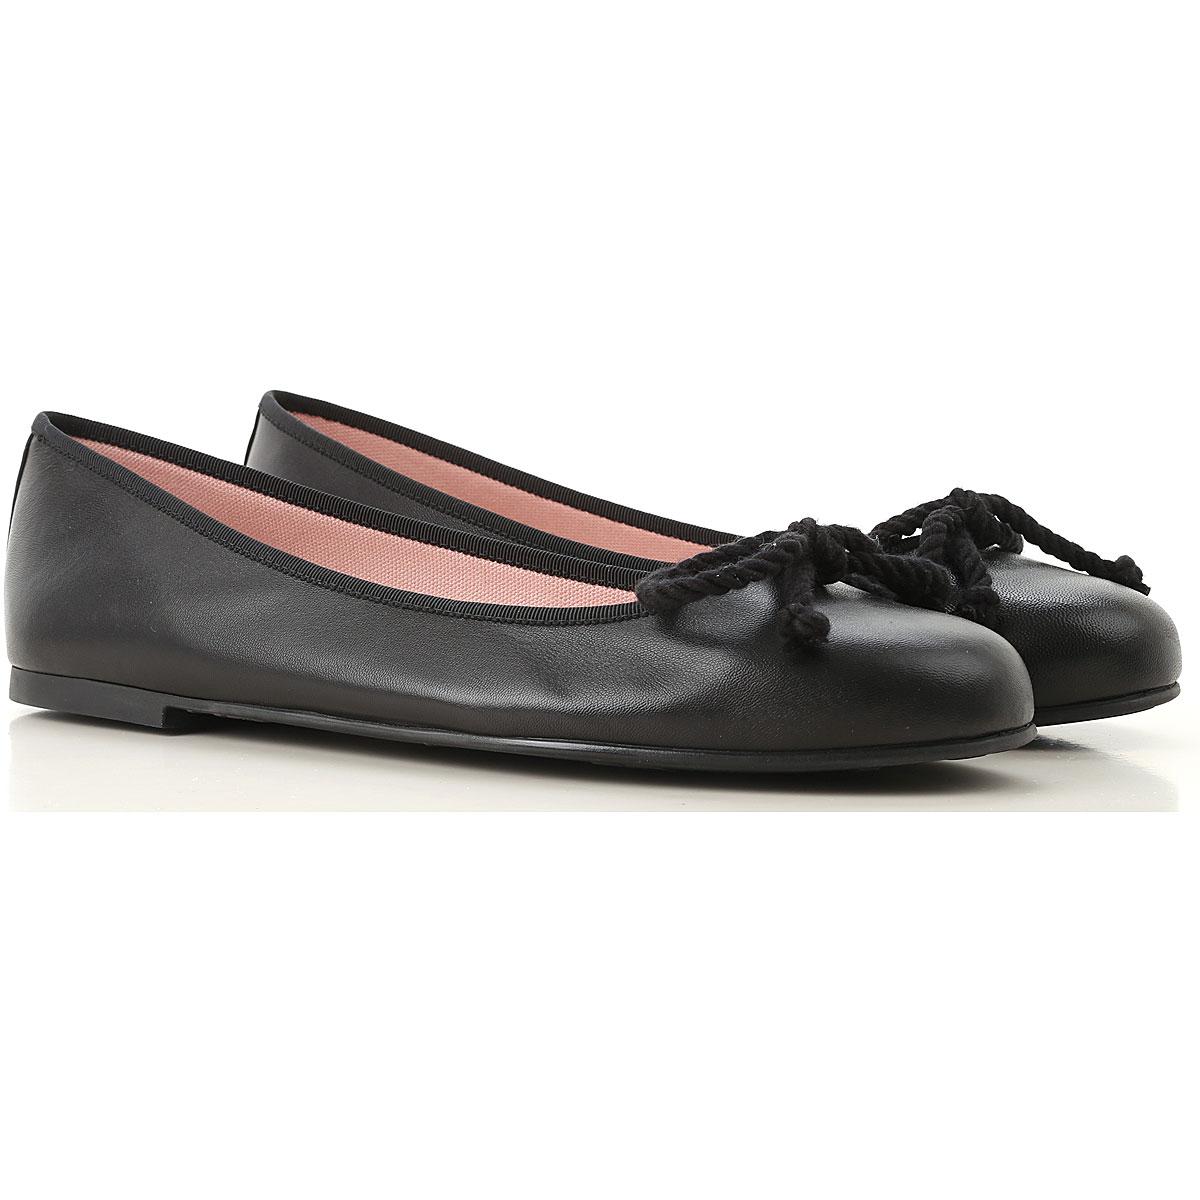 Download Lyst - Pretty Ballerinas Ballet Flats Ballerina Shoes For ...